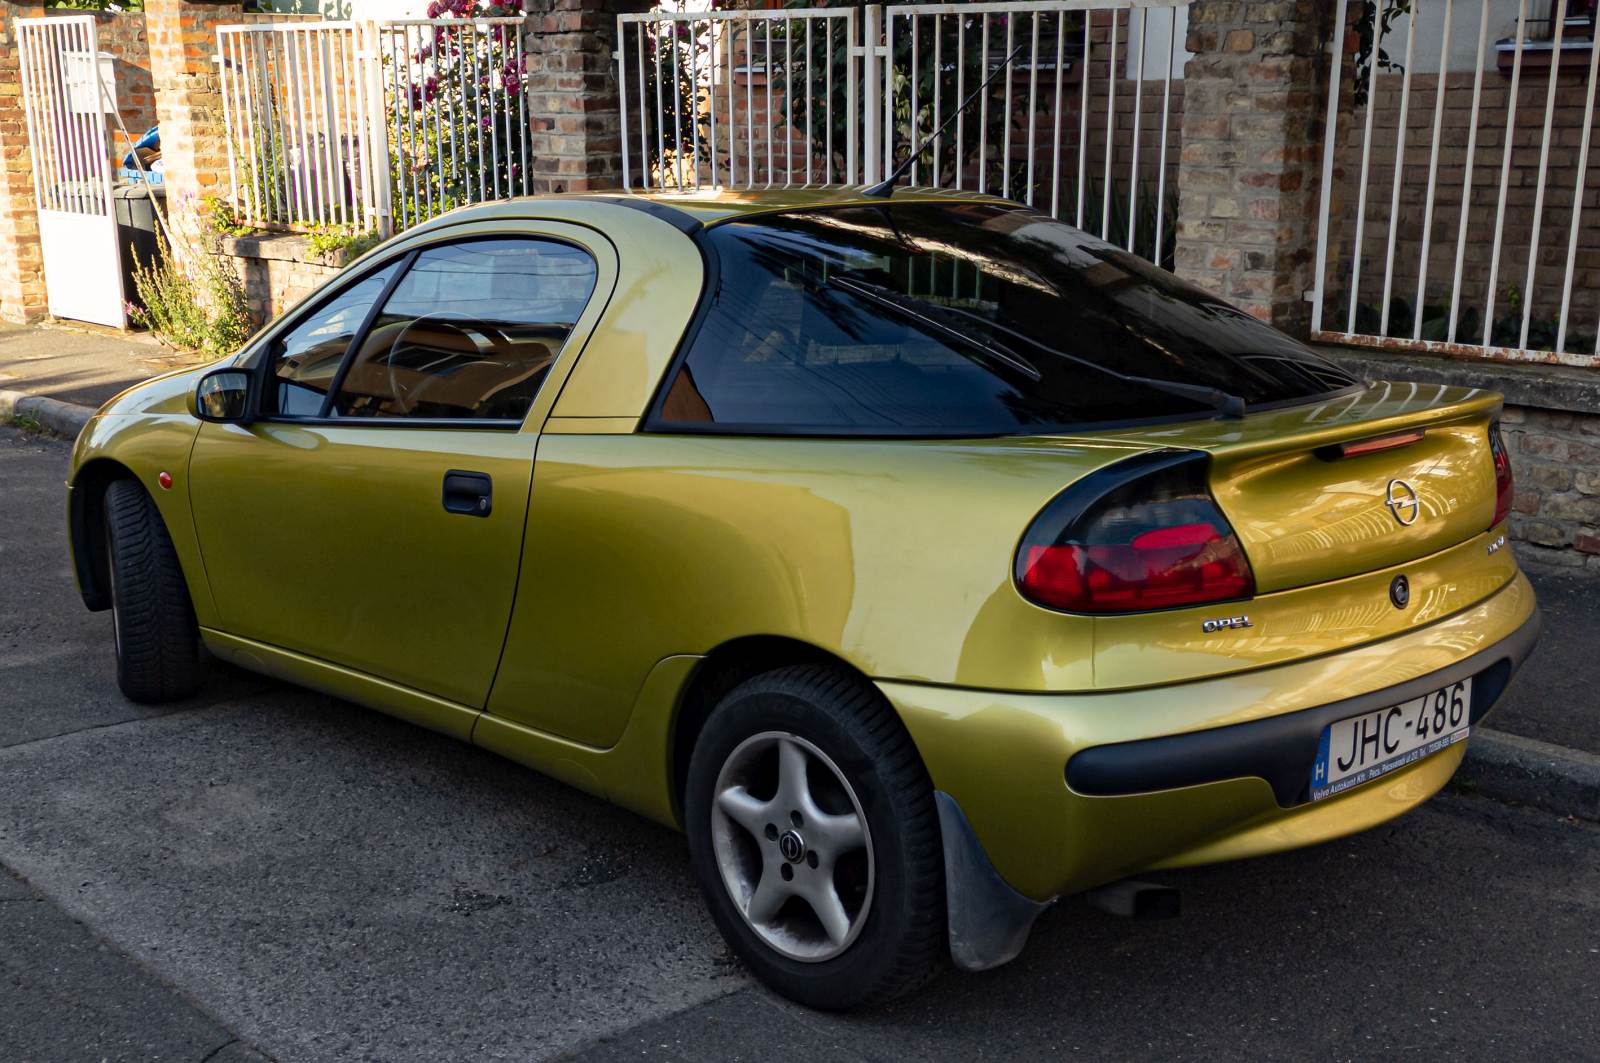 Rückansicht: Opel Tigra Mk1 in Brokatgelb (Curry Yellow auch genannt). Foto: 06.2022.